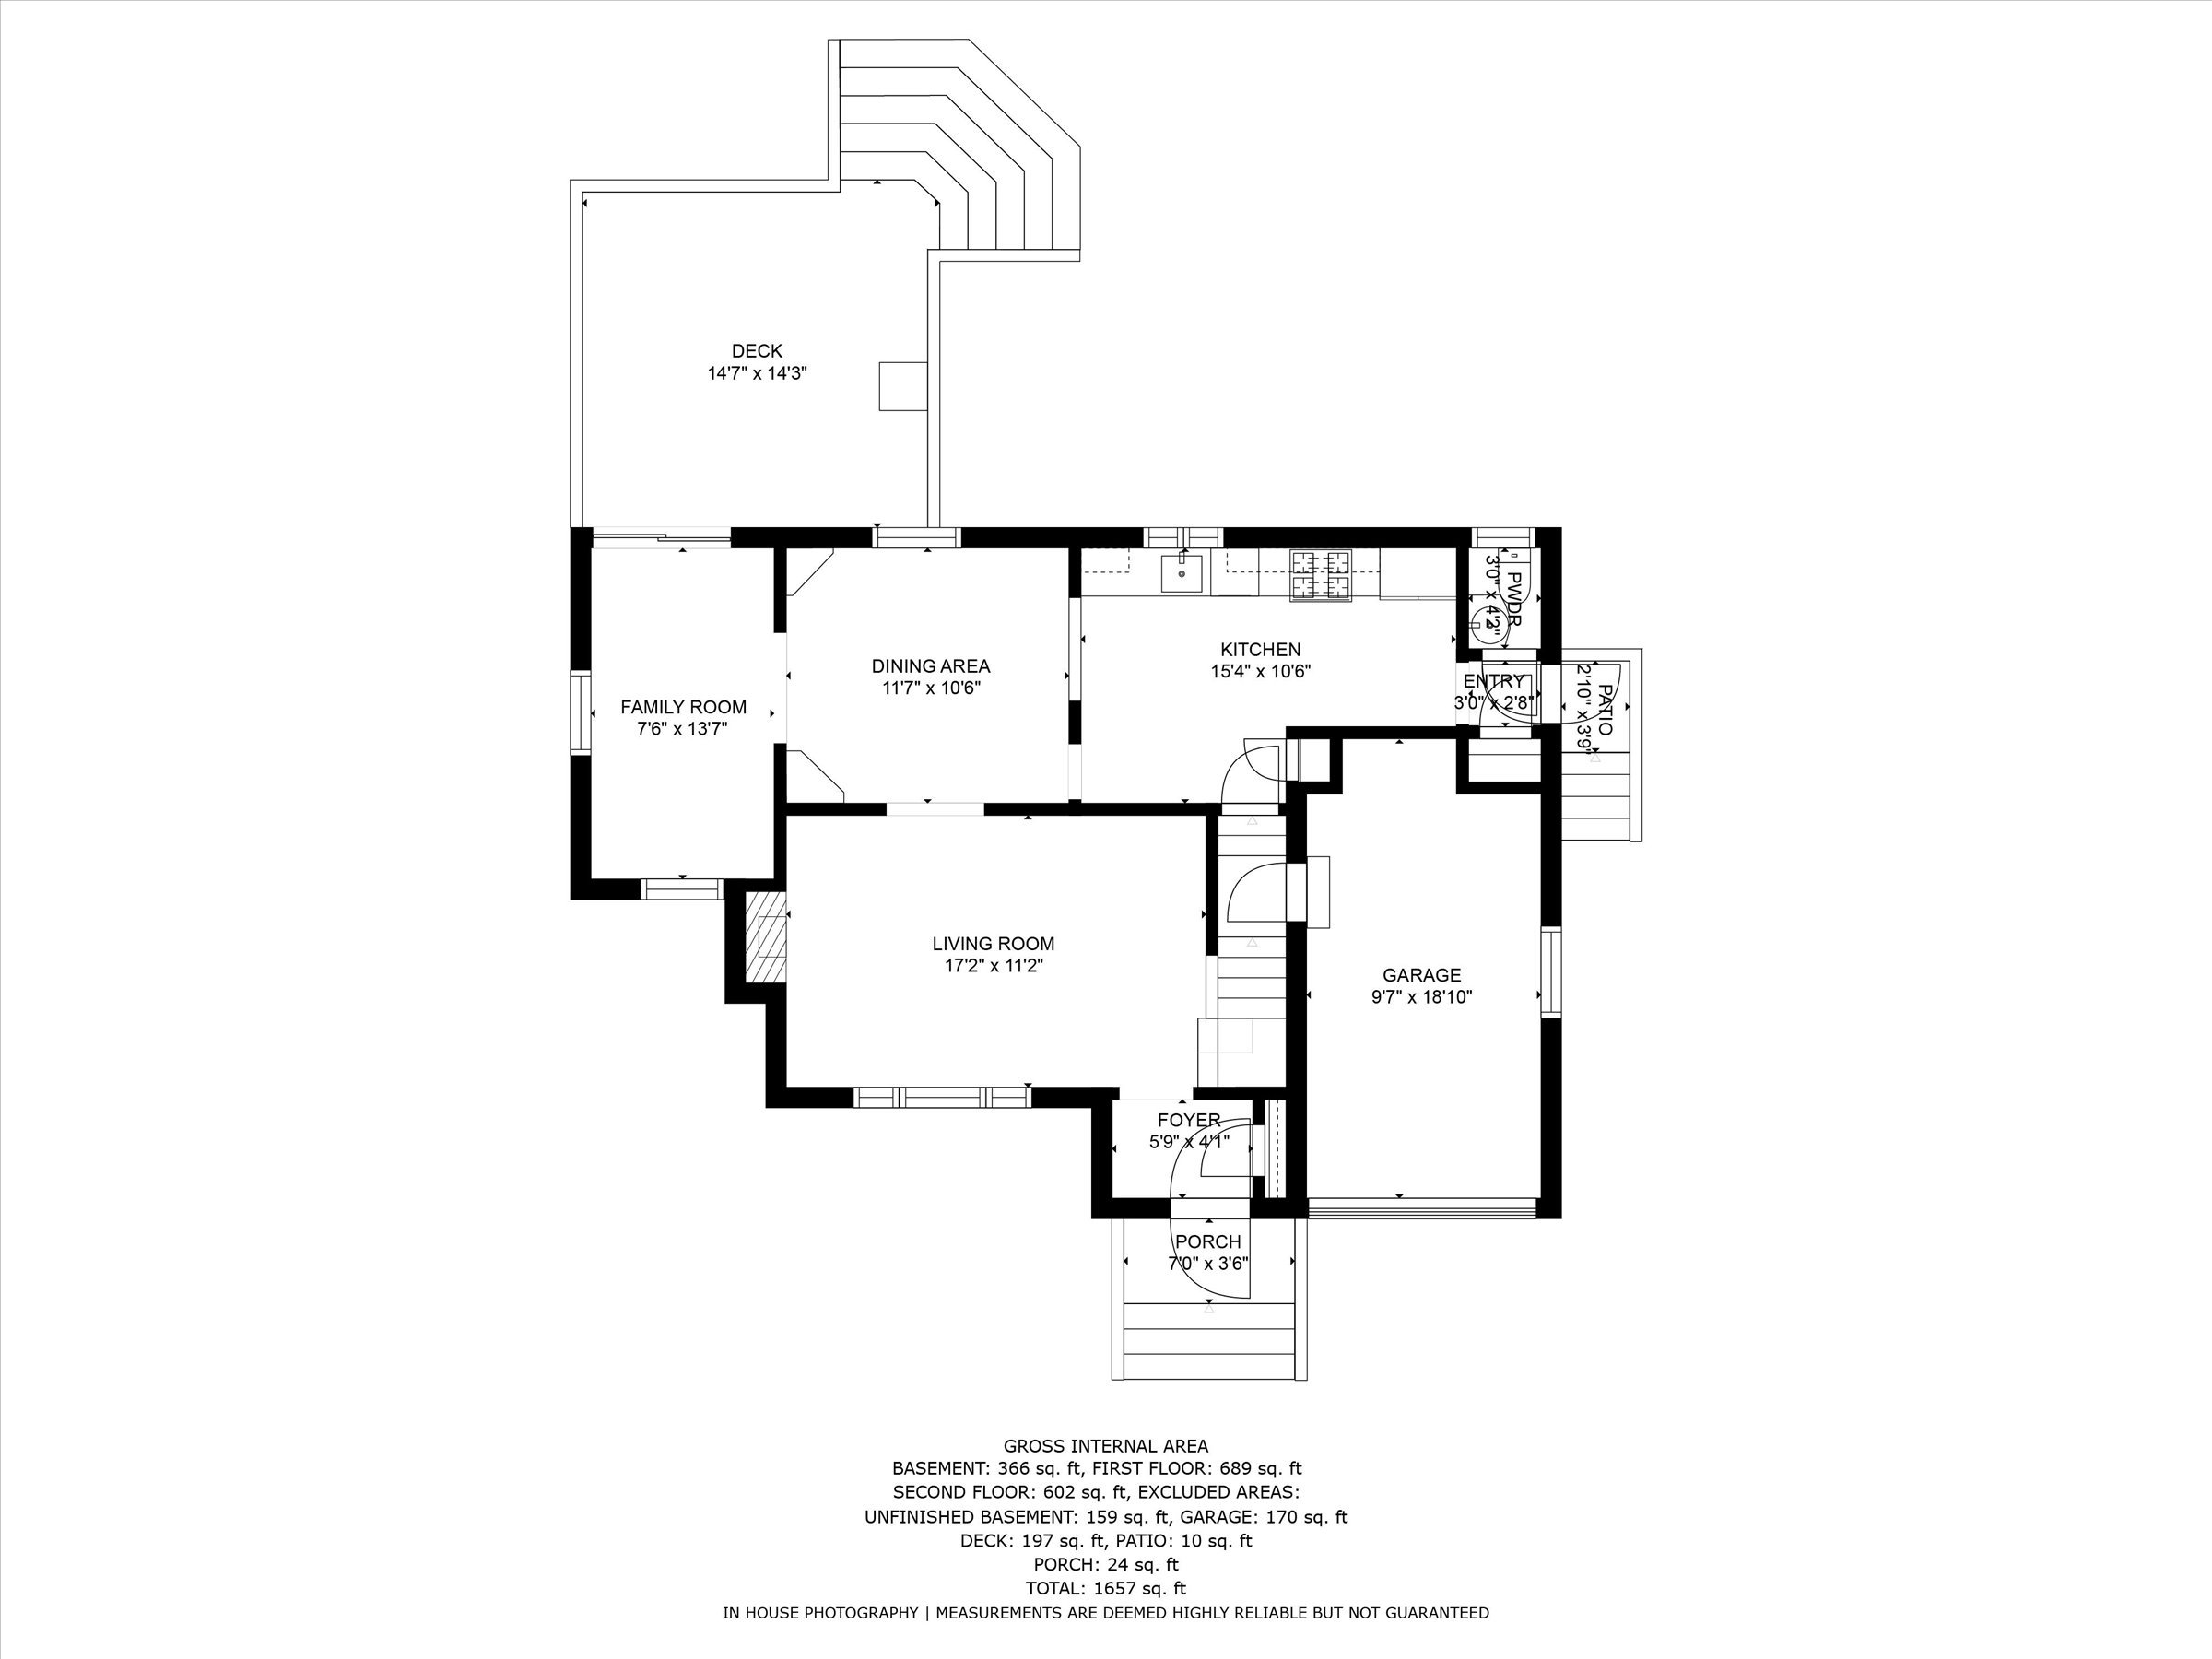 3-17 Eder floor plan first floor.jpg